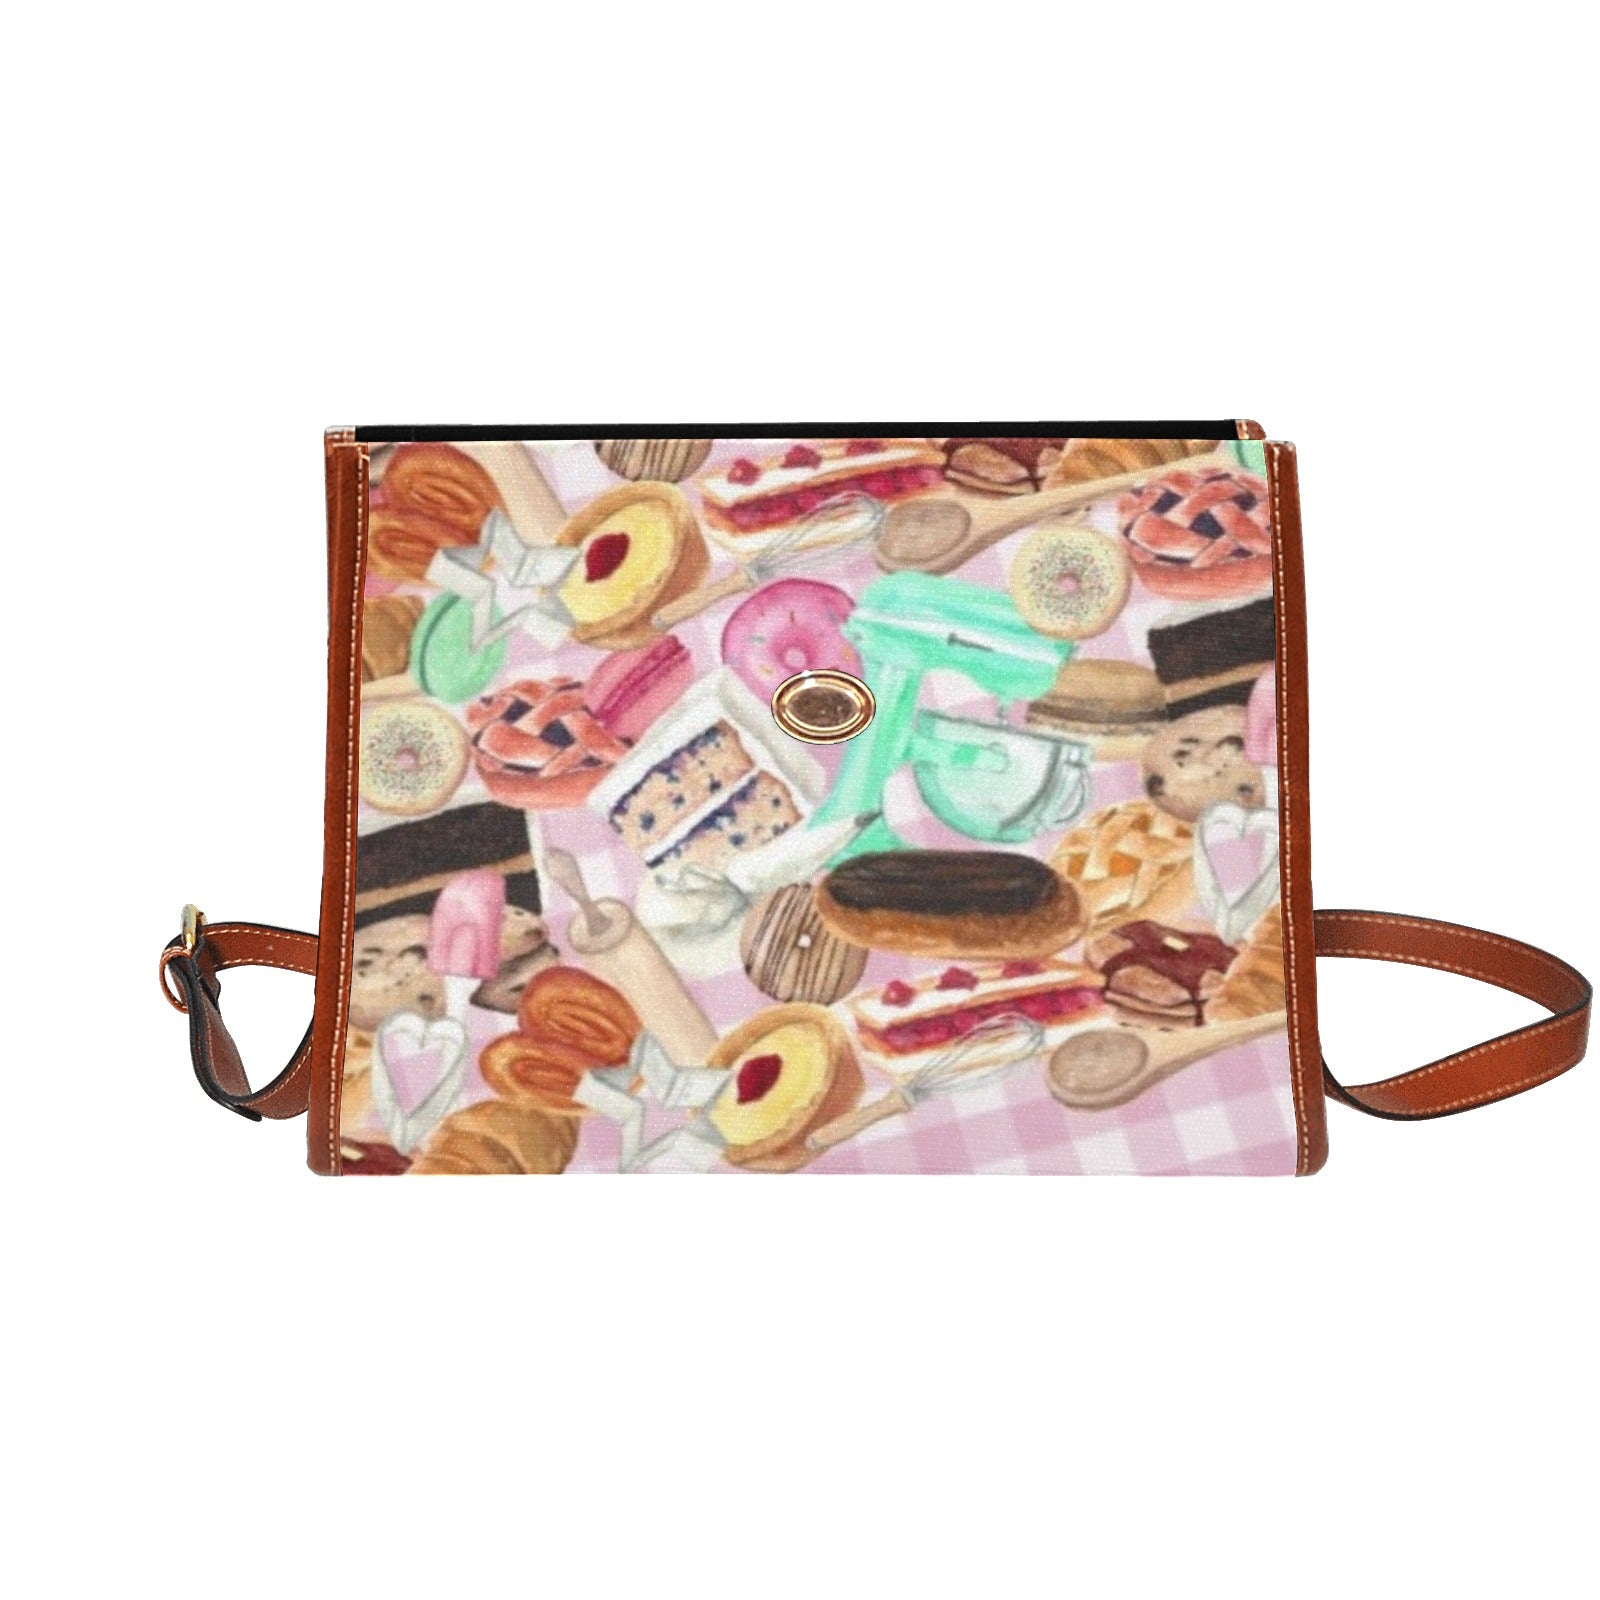 Bakery - Waterproof Canvas Handbag